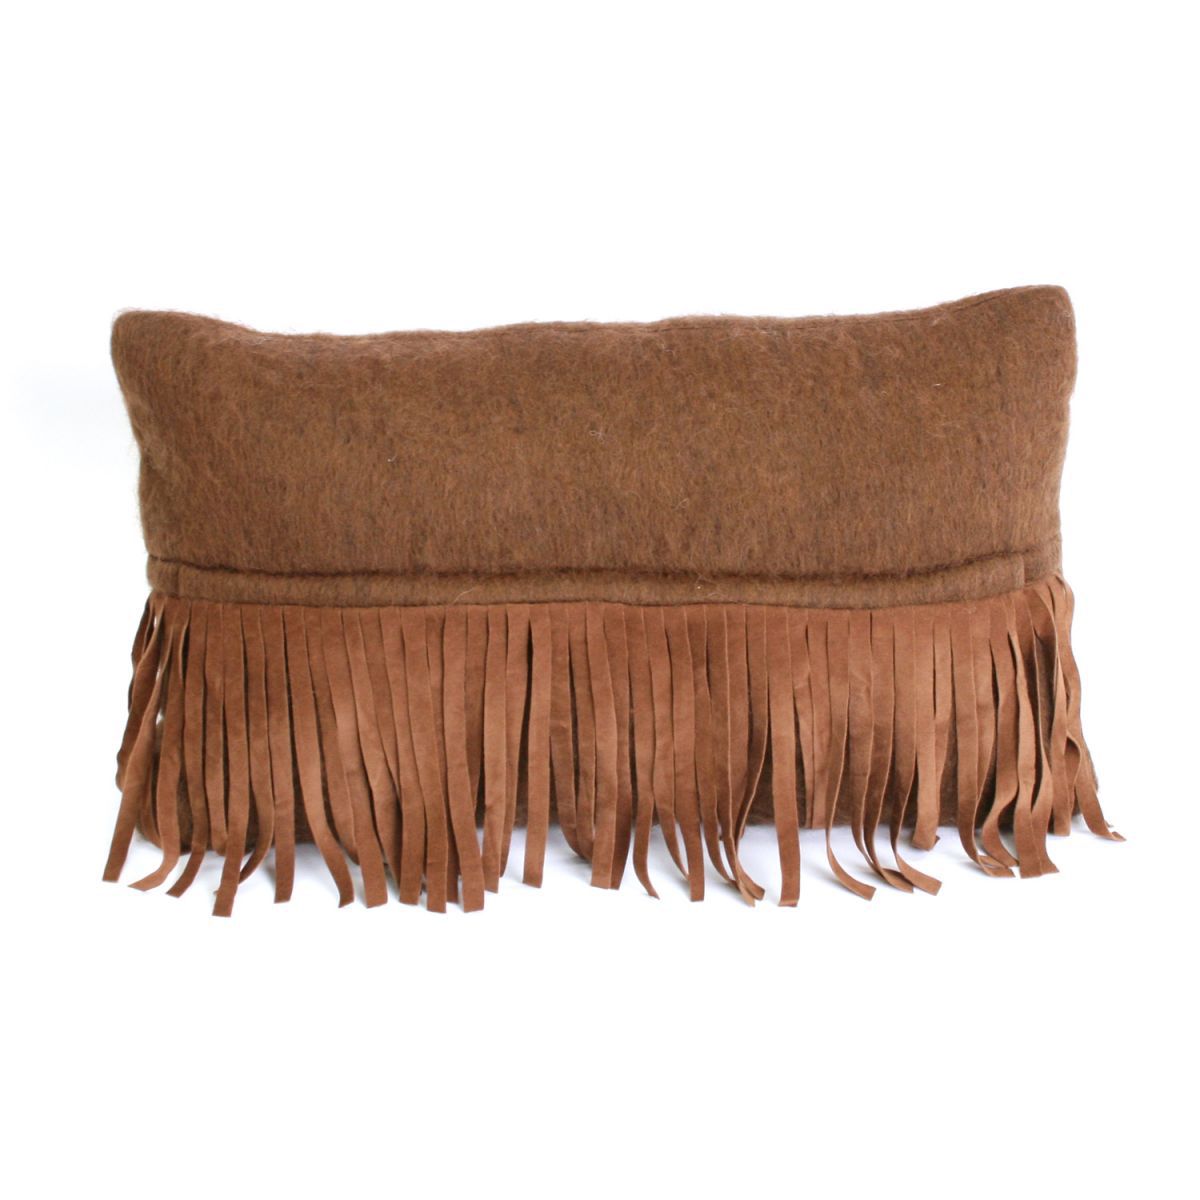 cushion brown with suedine fringes 60x40cm